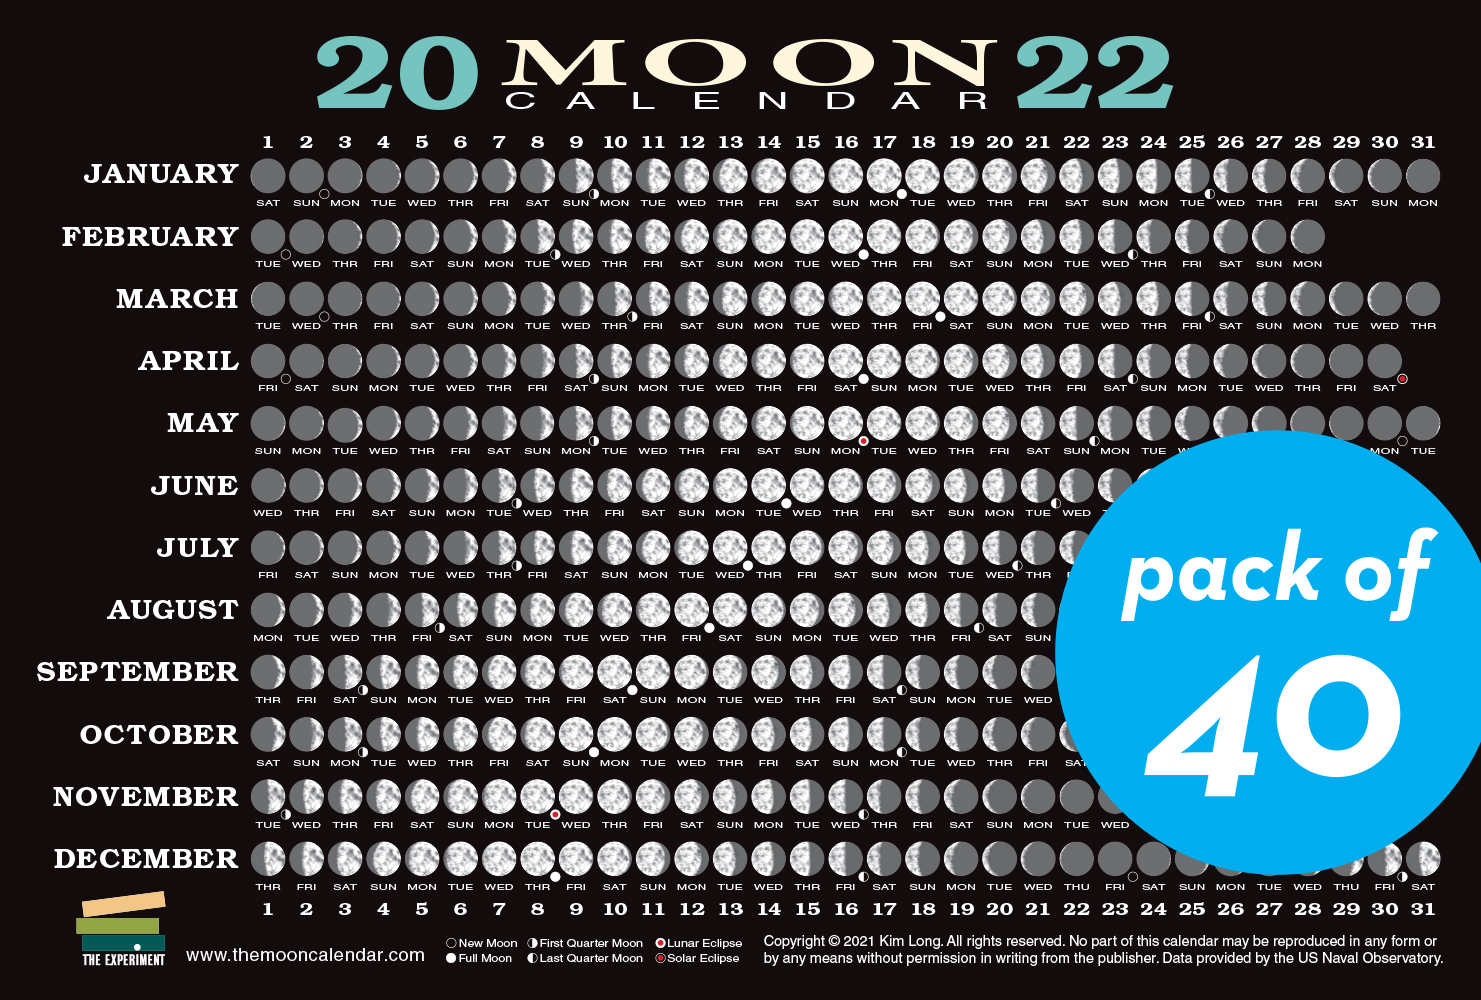 Moon Phase Calendar July 2022 2022 Moon Calendar Card (40 Pack) | The Experiment